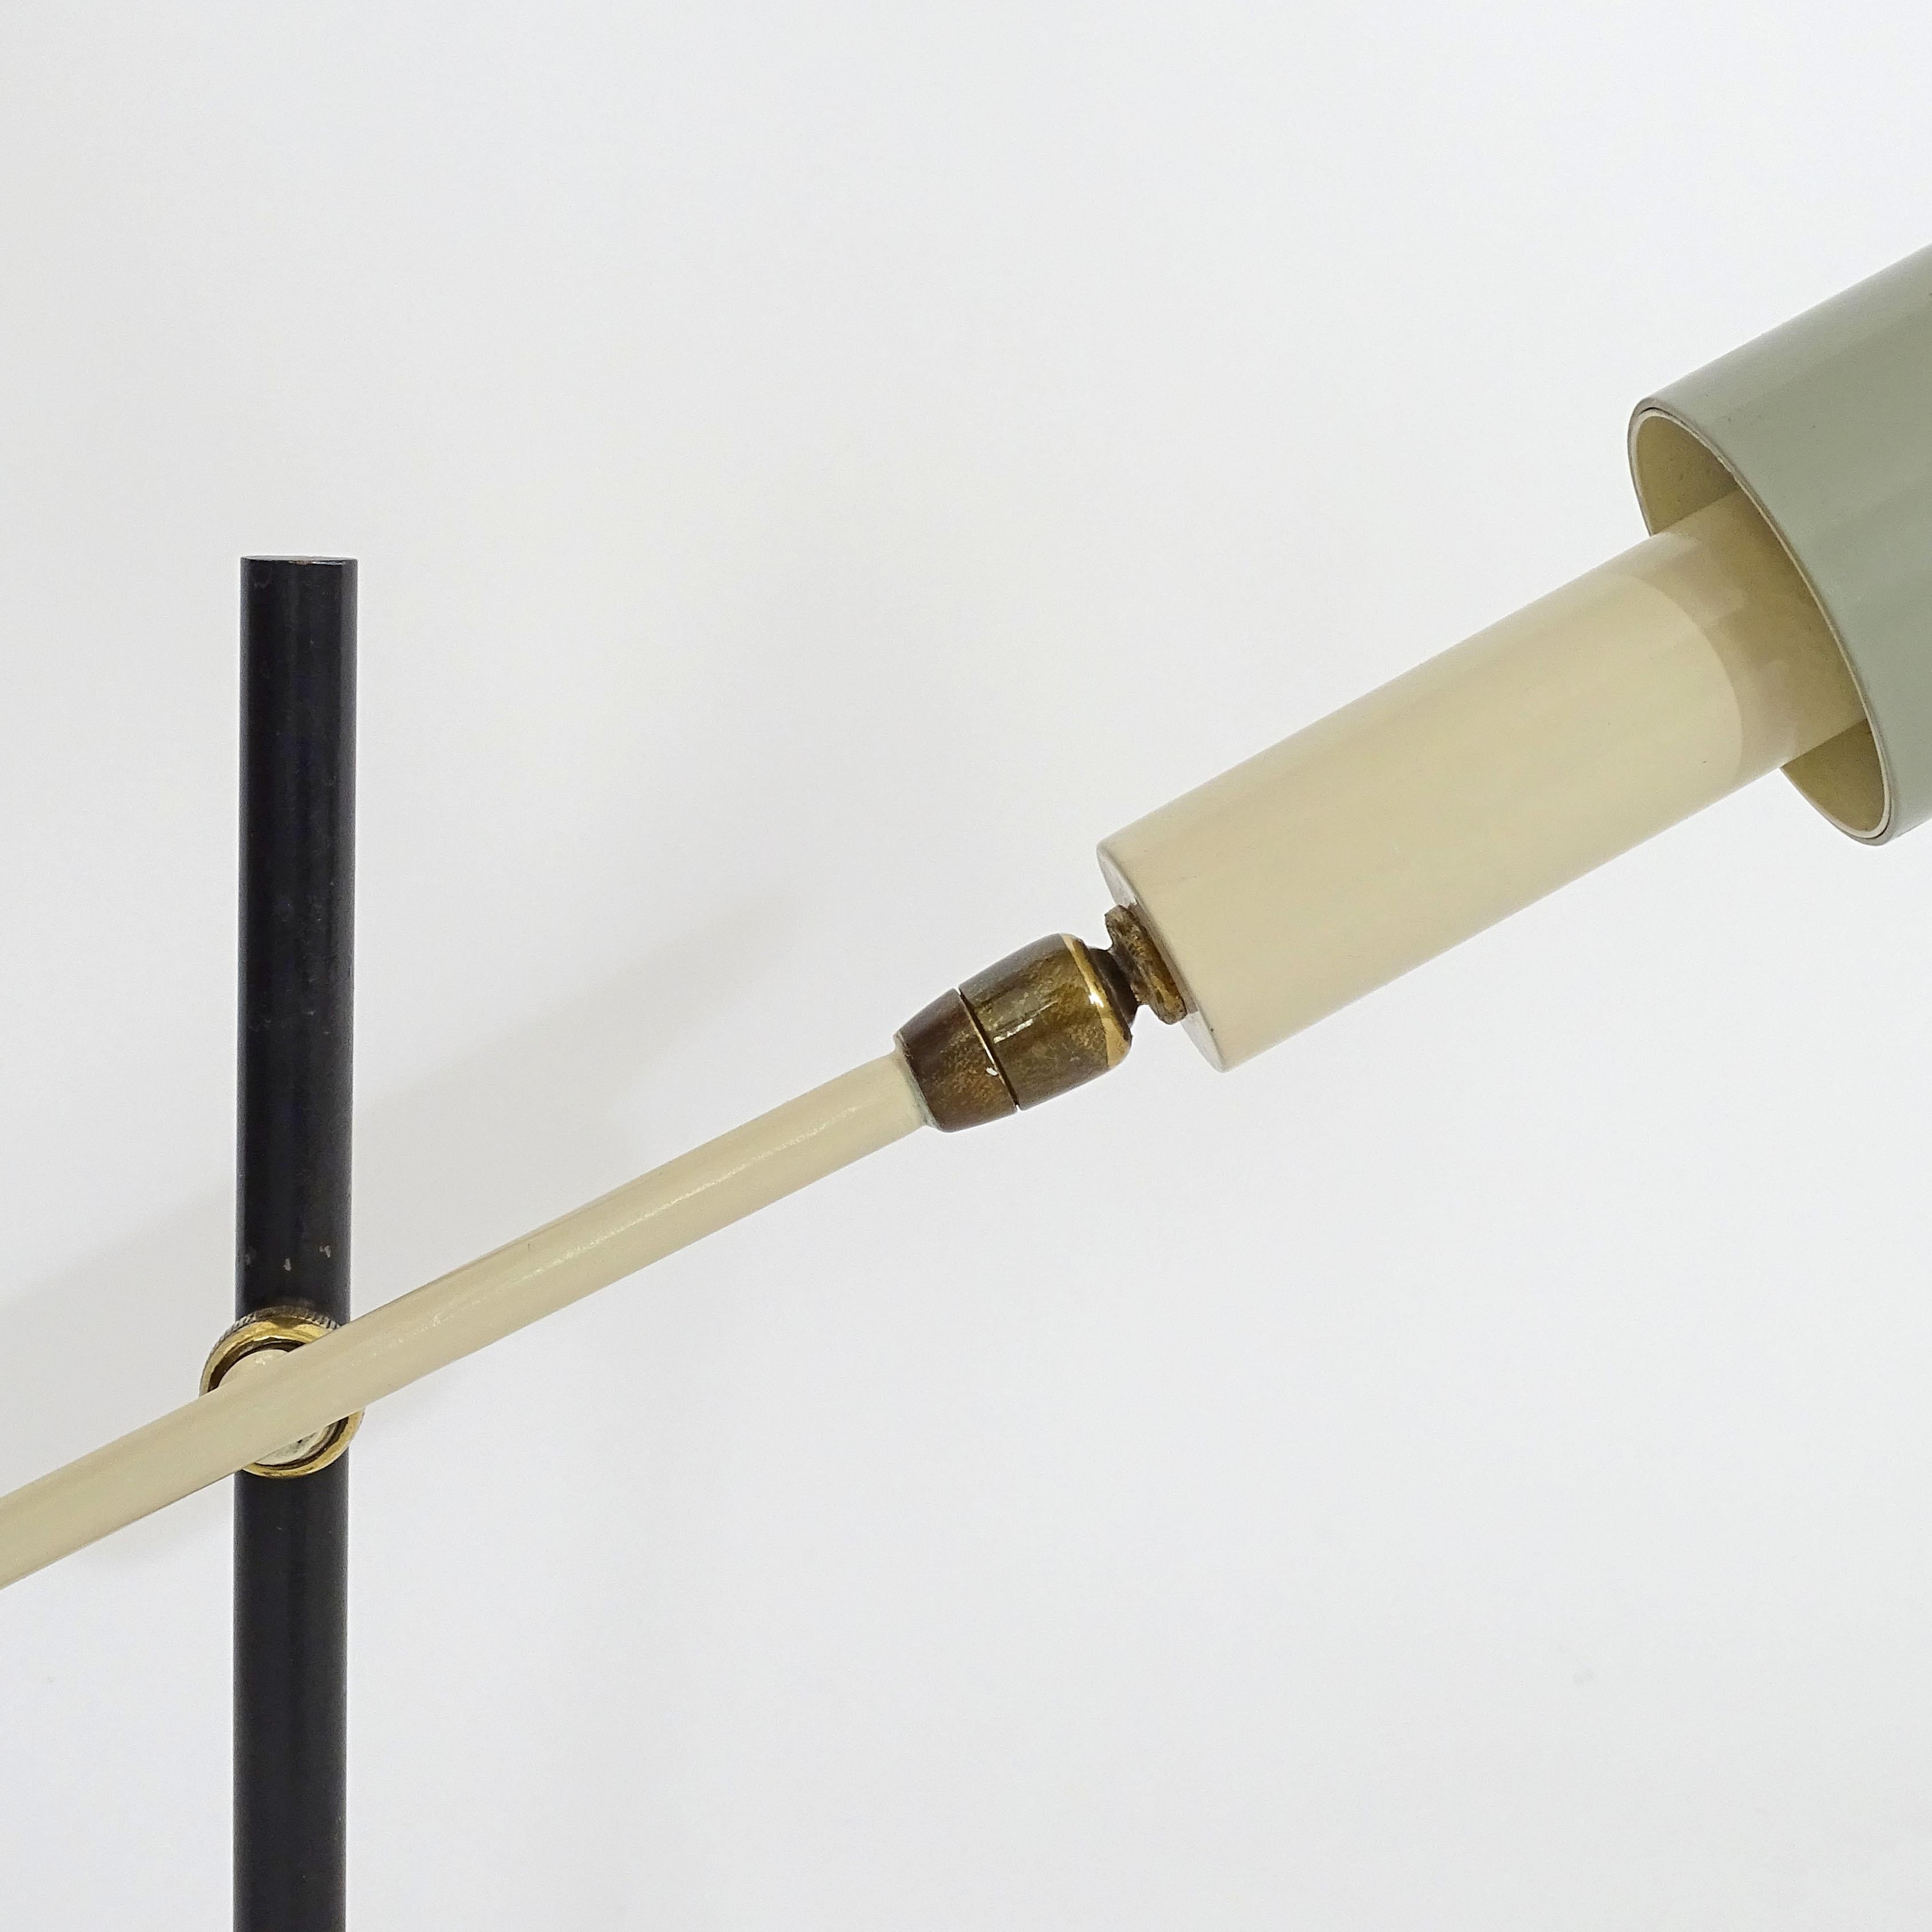 Unique design for a pair of adjustable Stilux Milano table lamps.